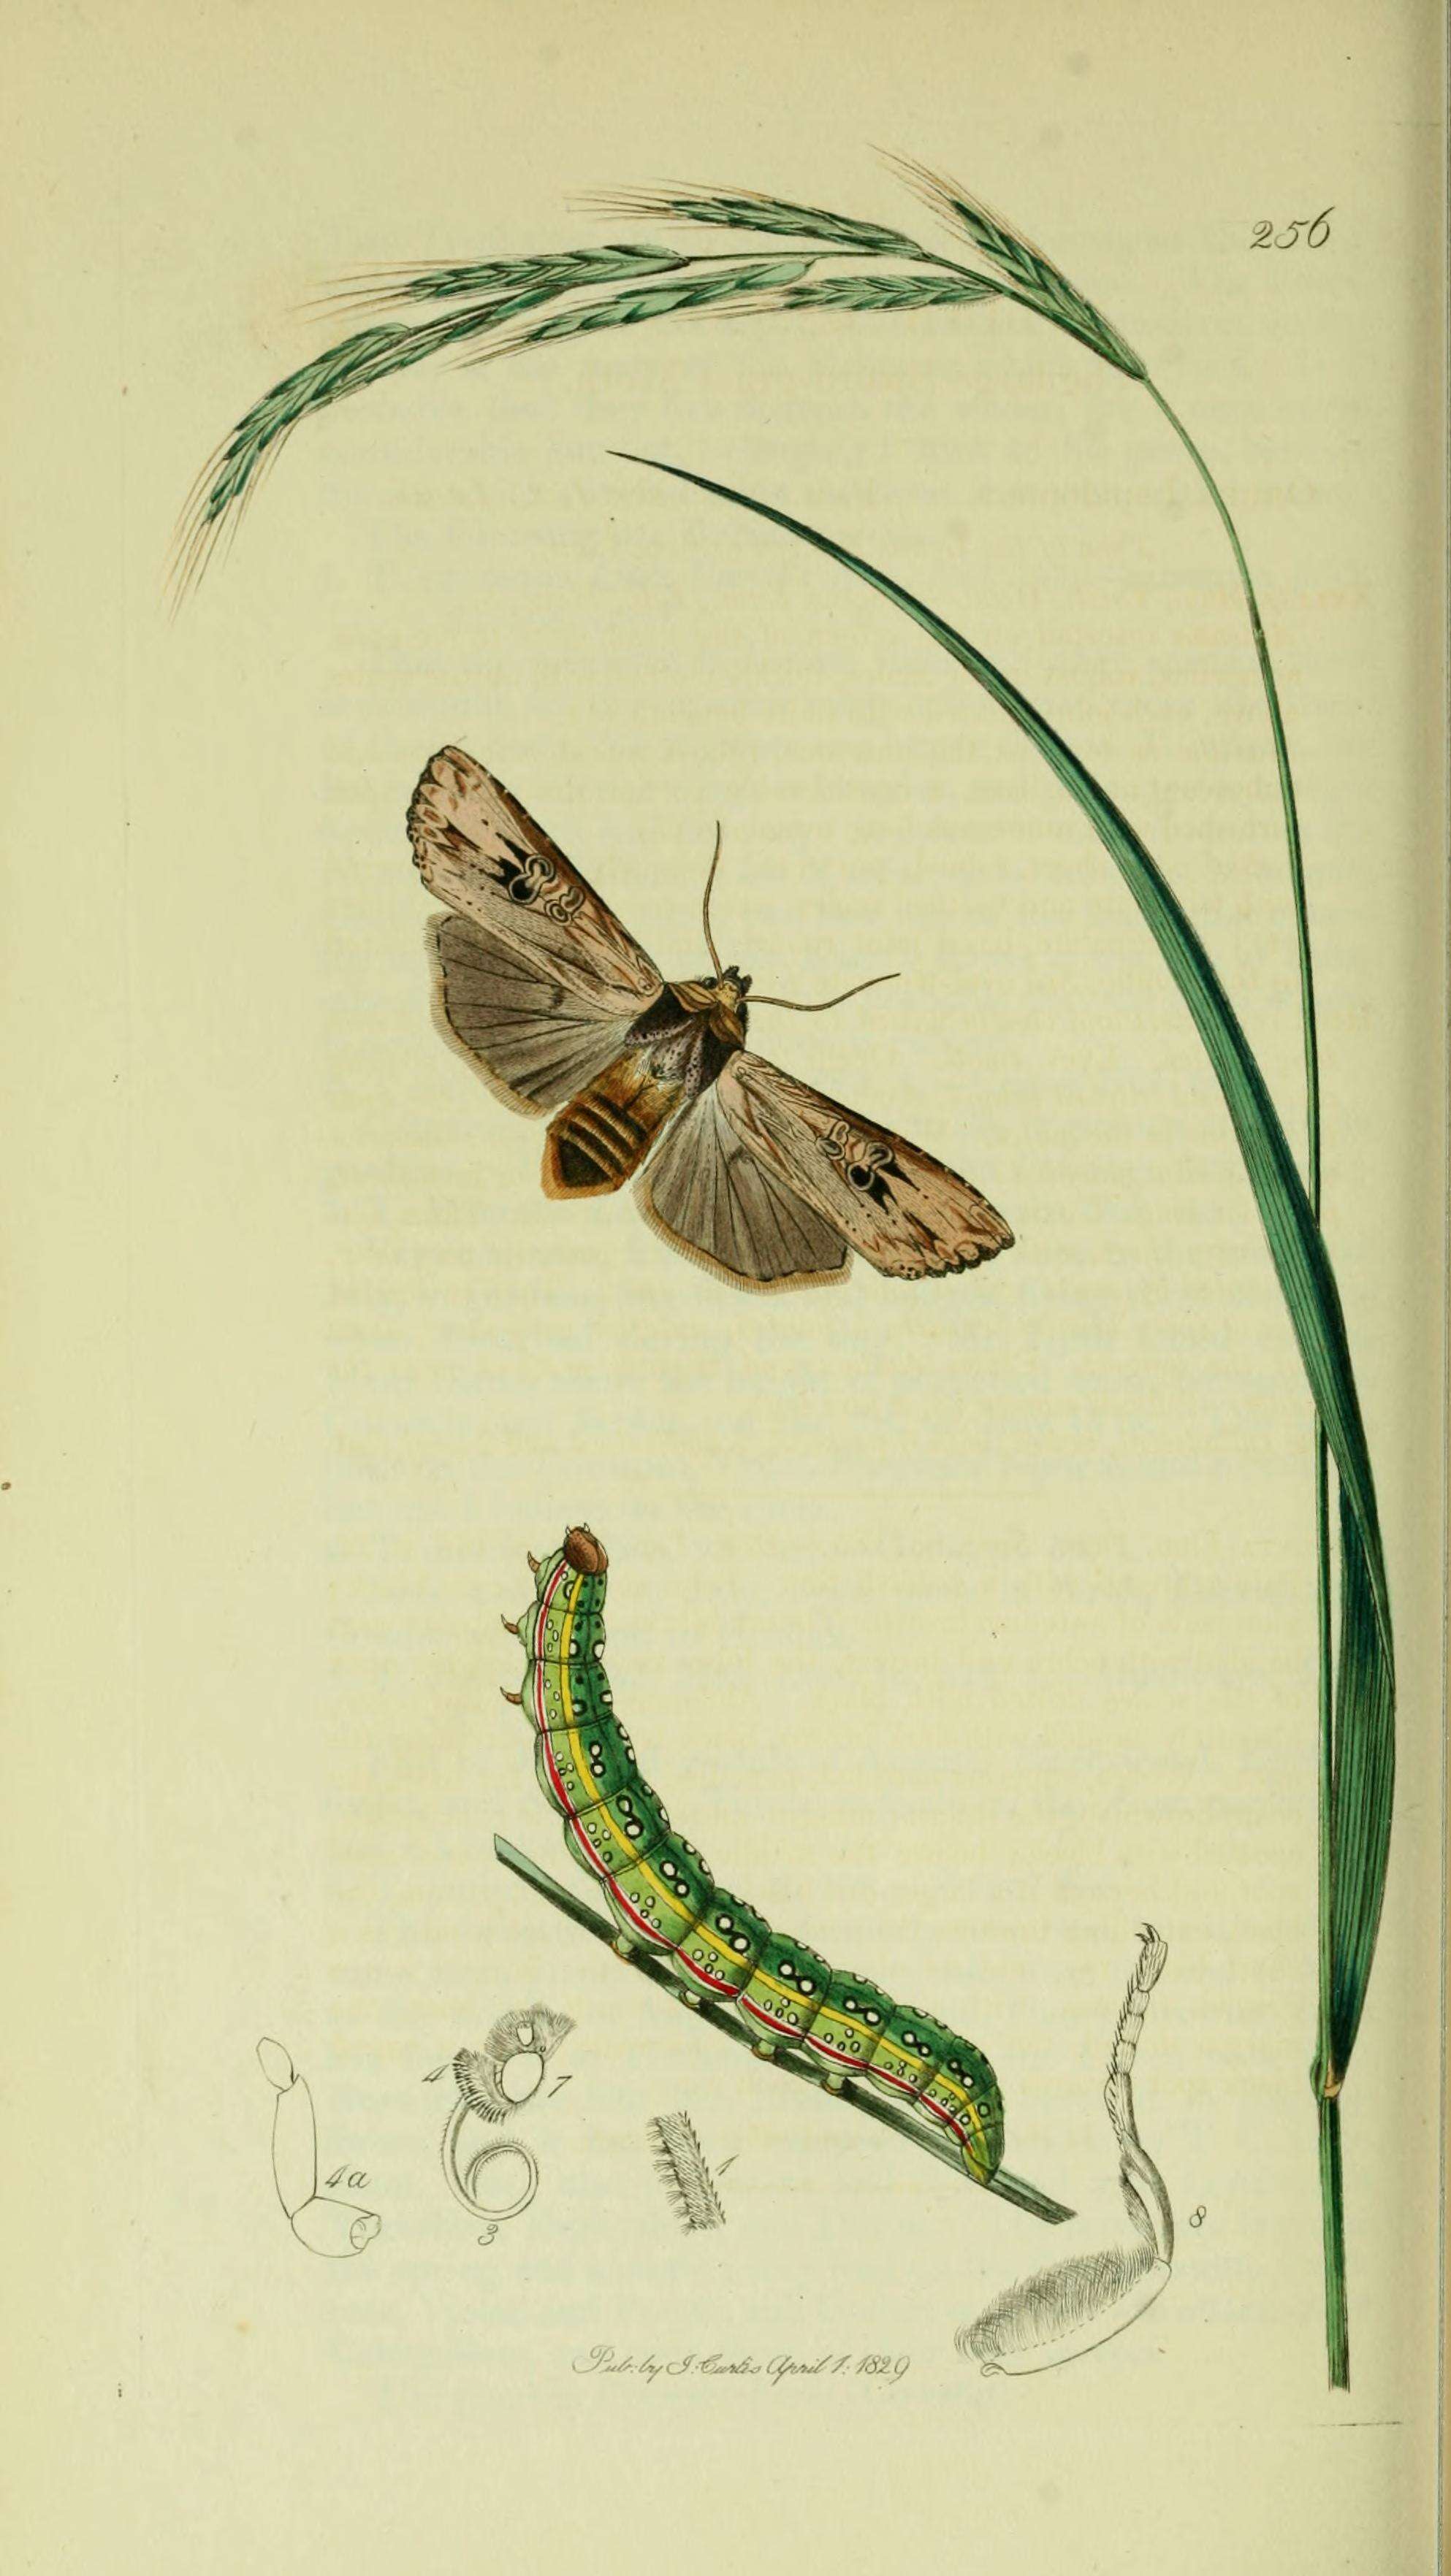 Image of Sword-grass moth